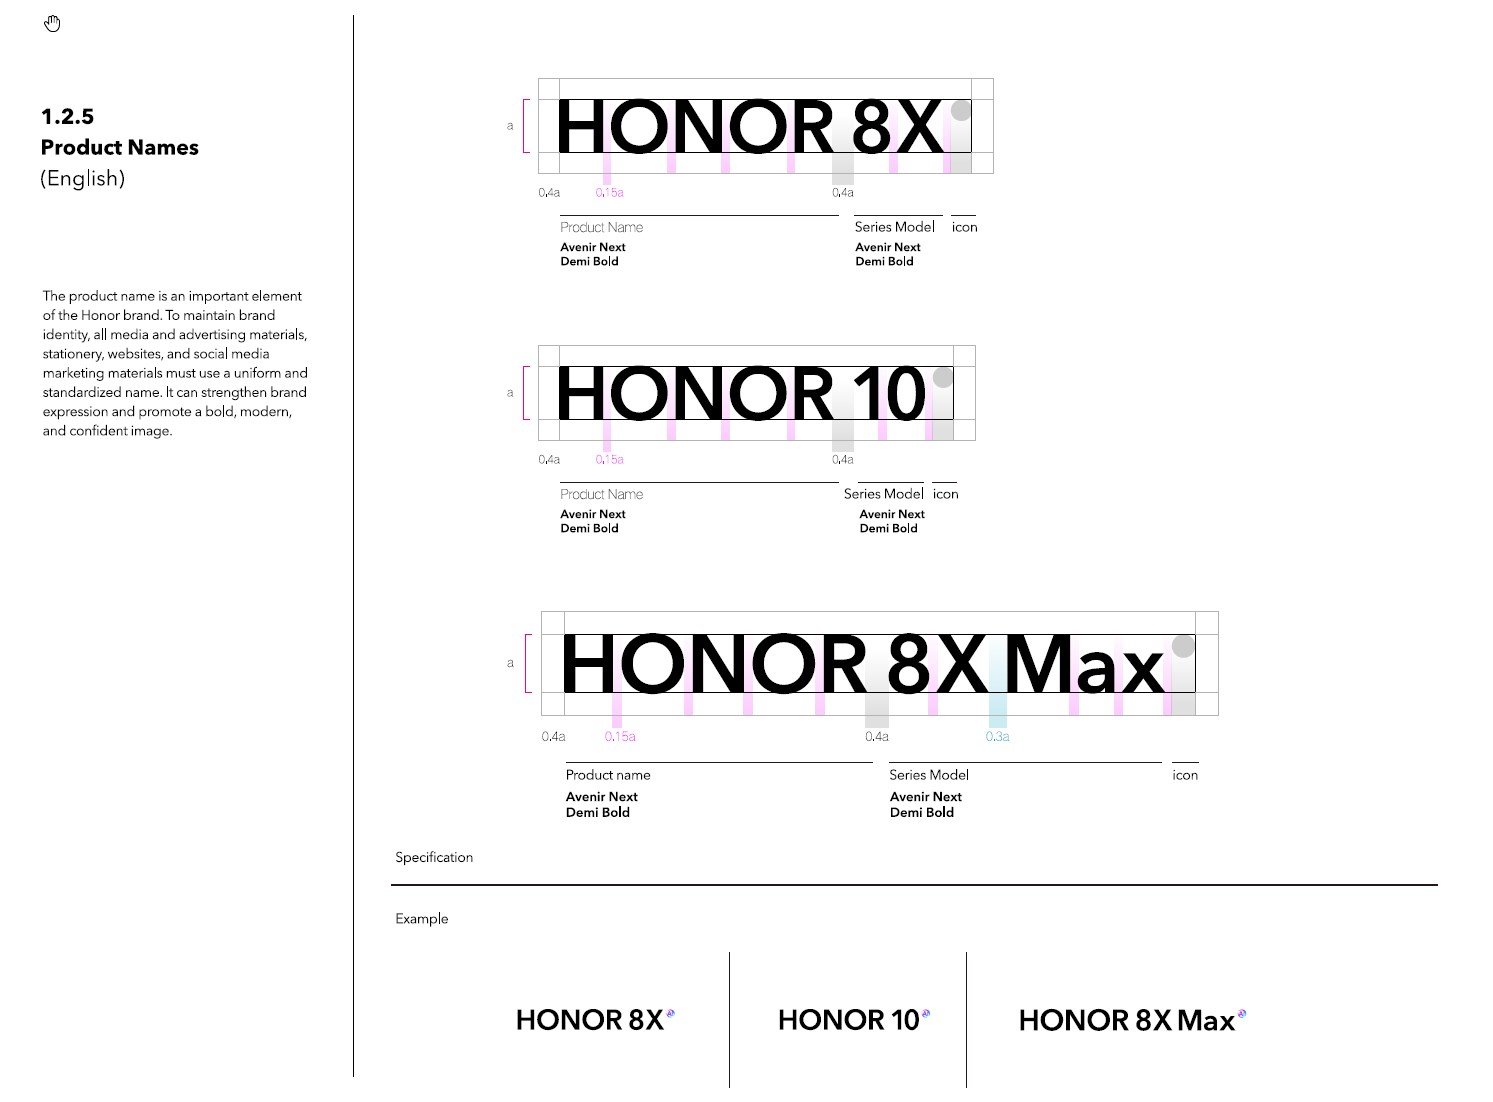 Honor Logo - Creation